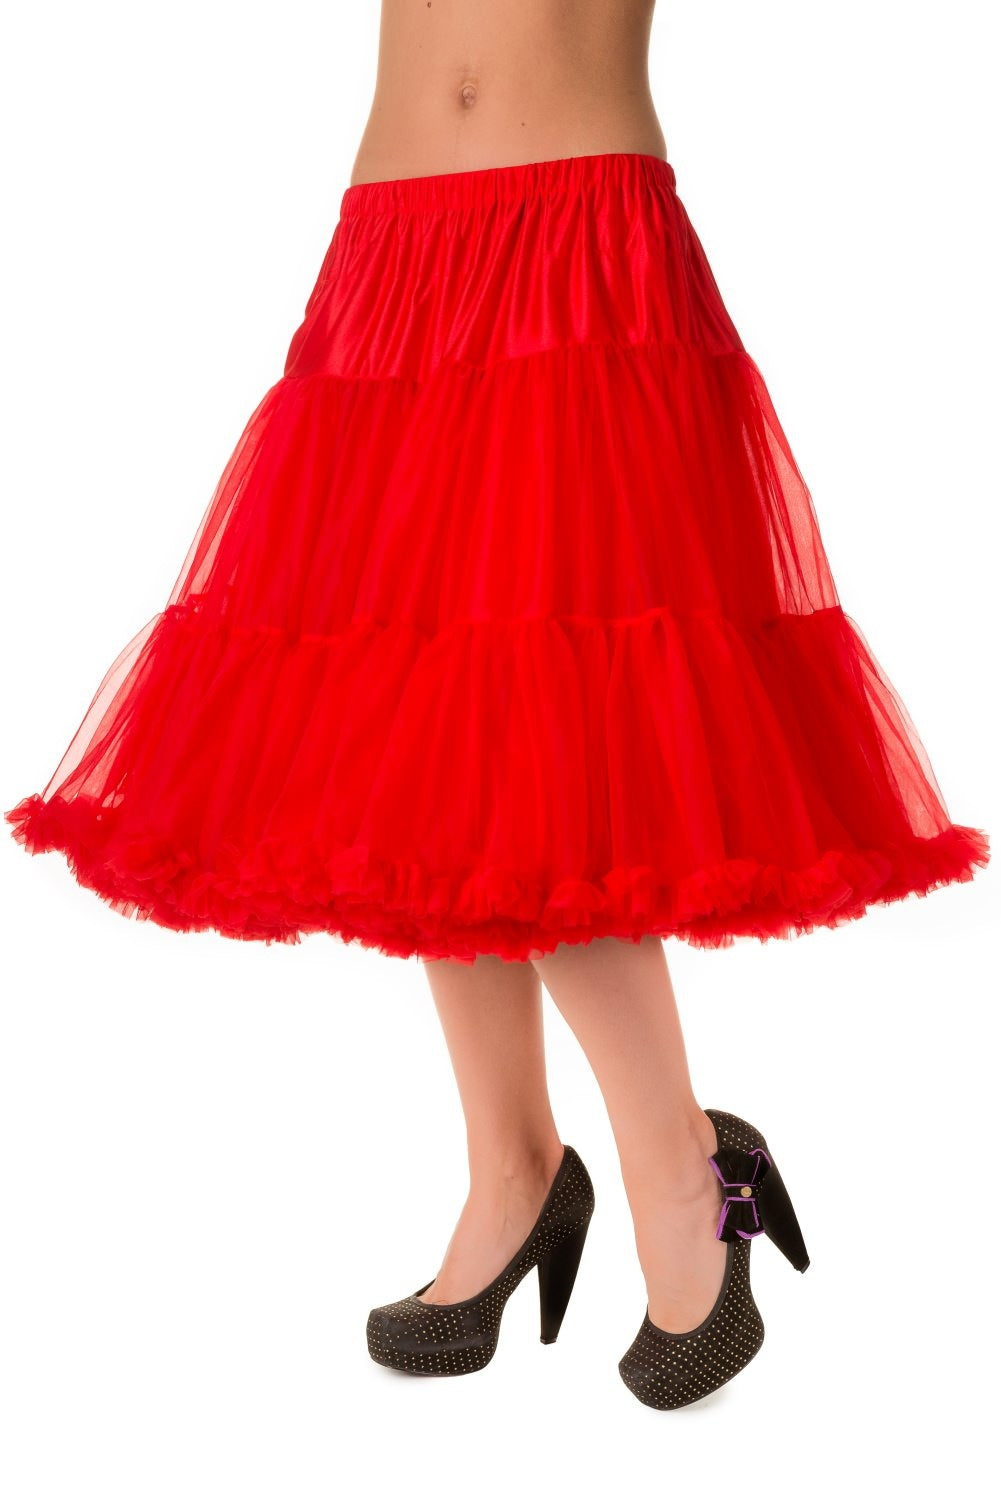 Model wearing polka dot black shoes and a ravishing red 26 inch petticoat